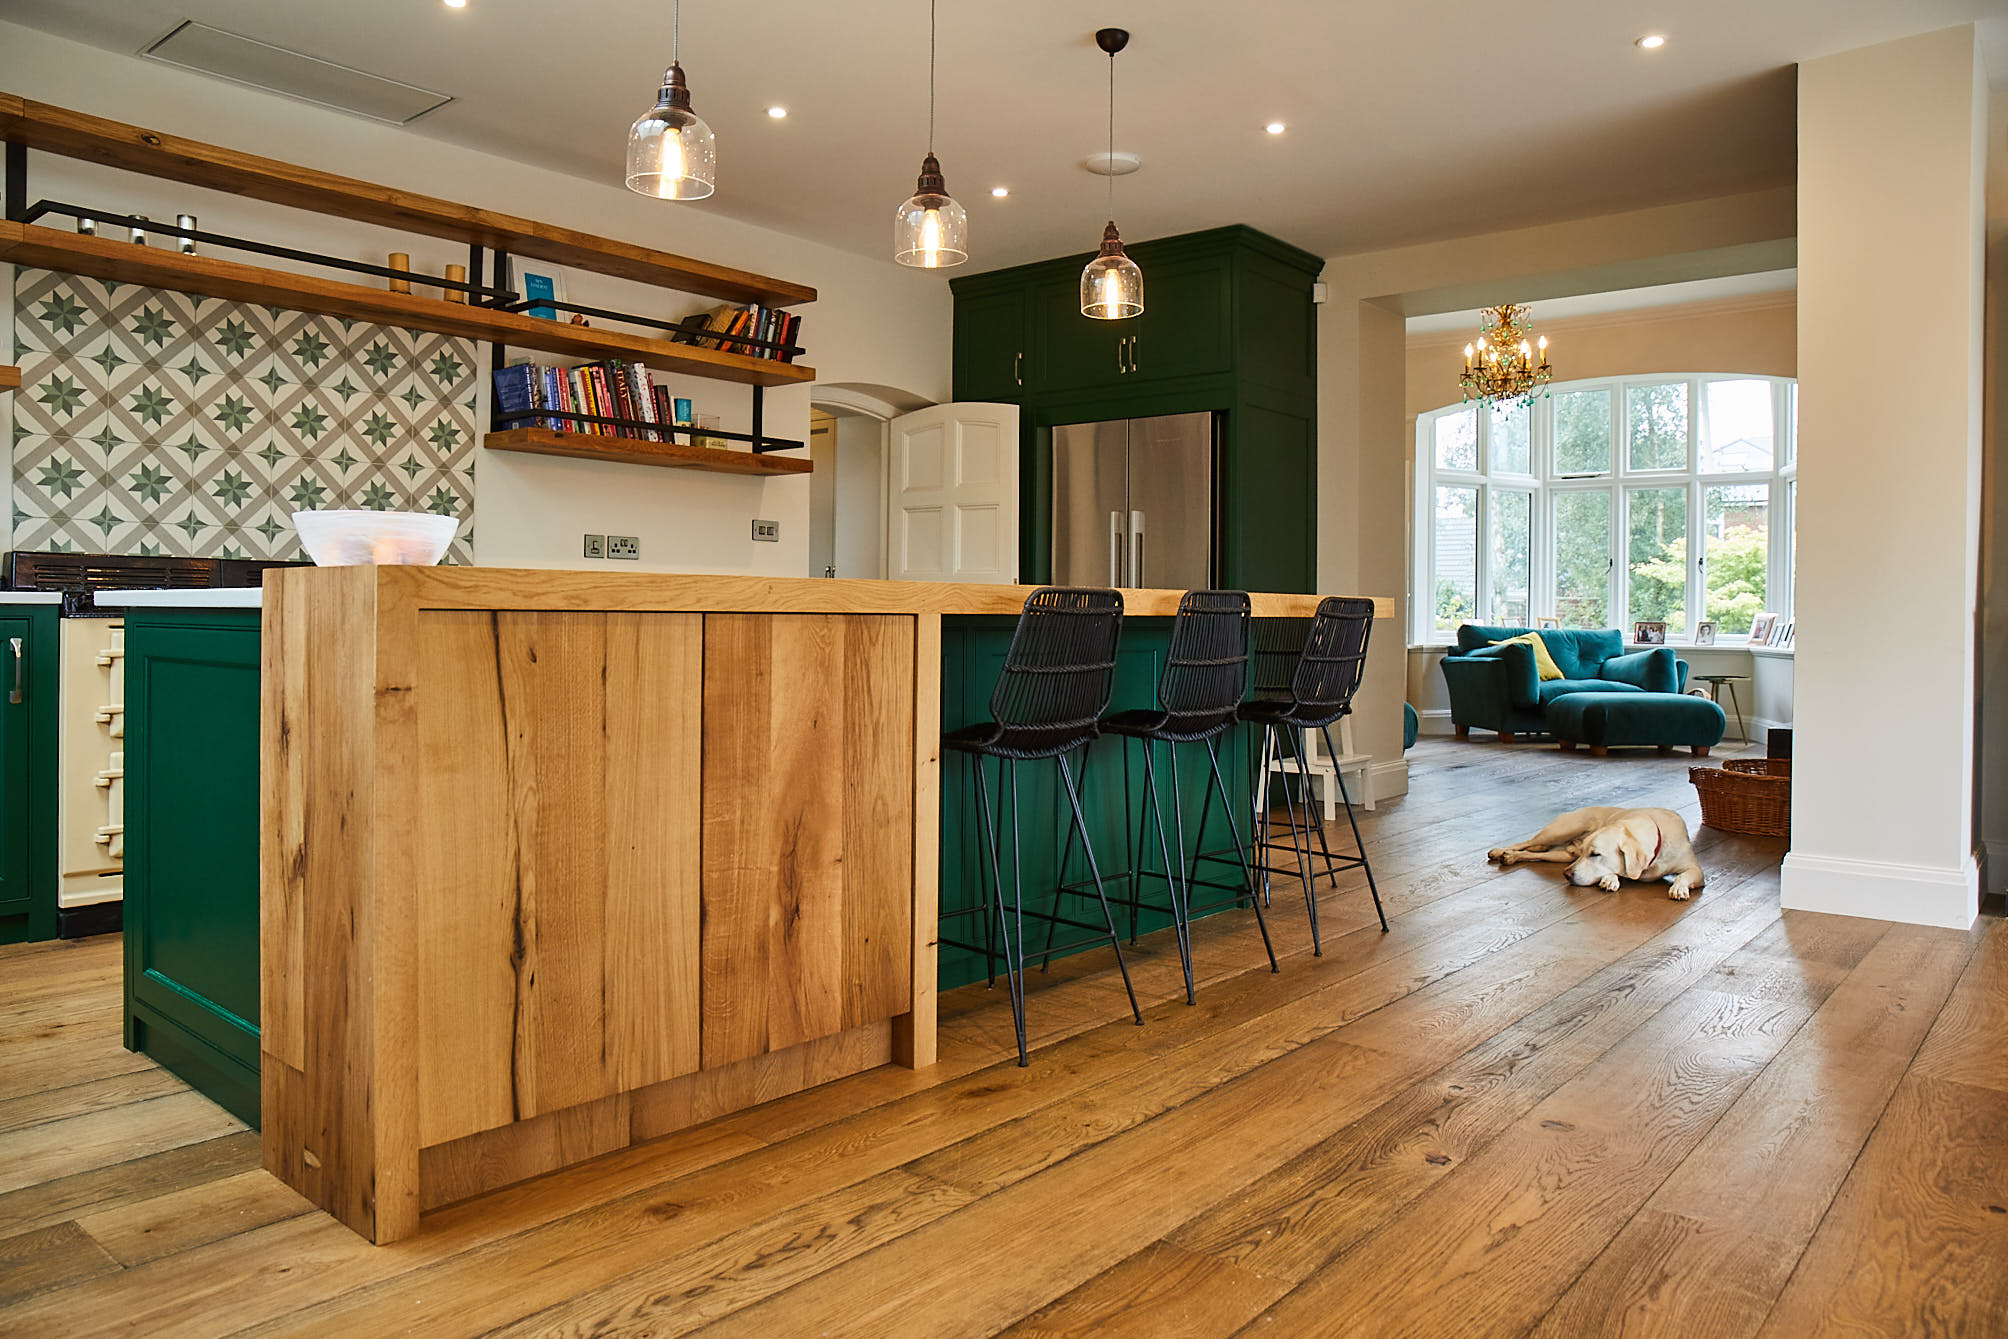 Dog sleeping in bespoke kitchen with green cabinets and oak breakfast bar